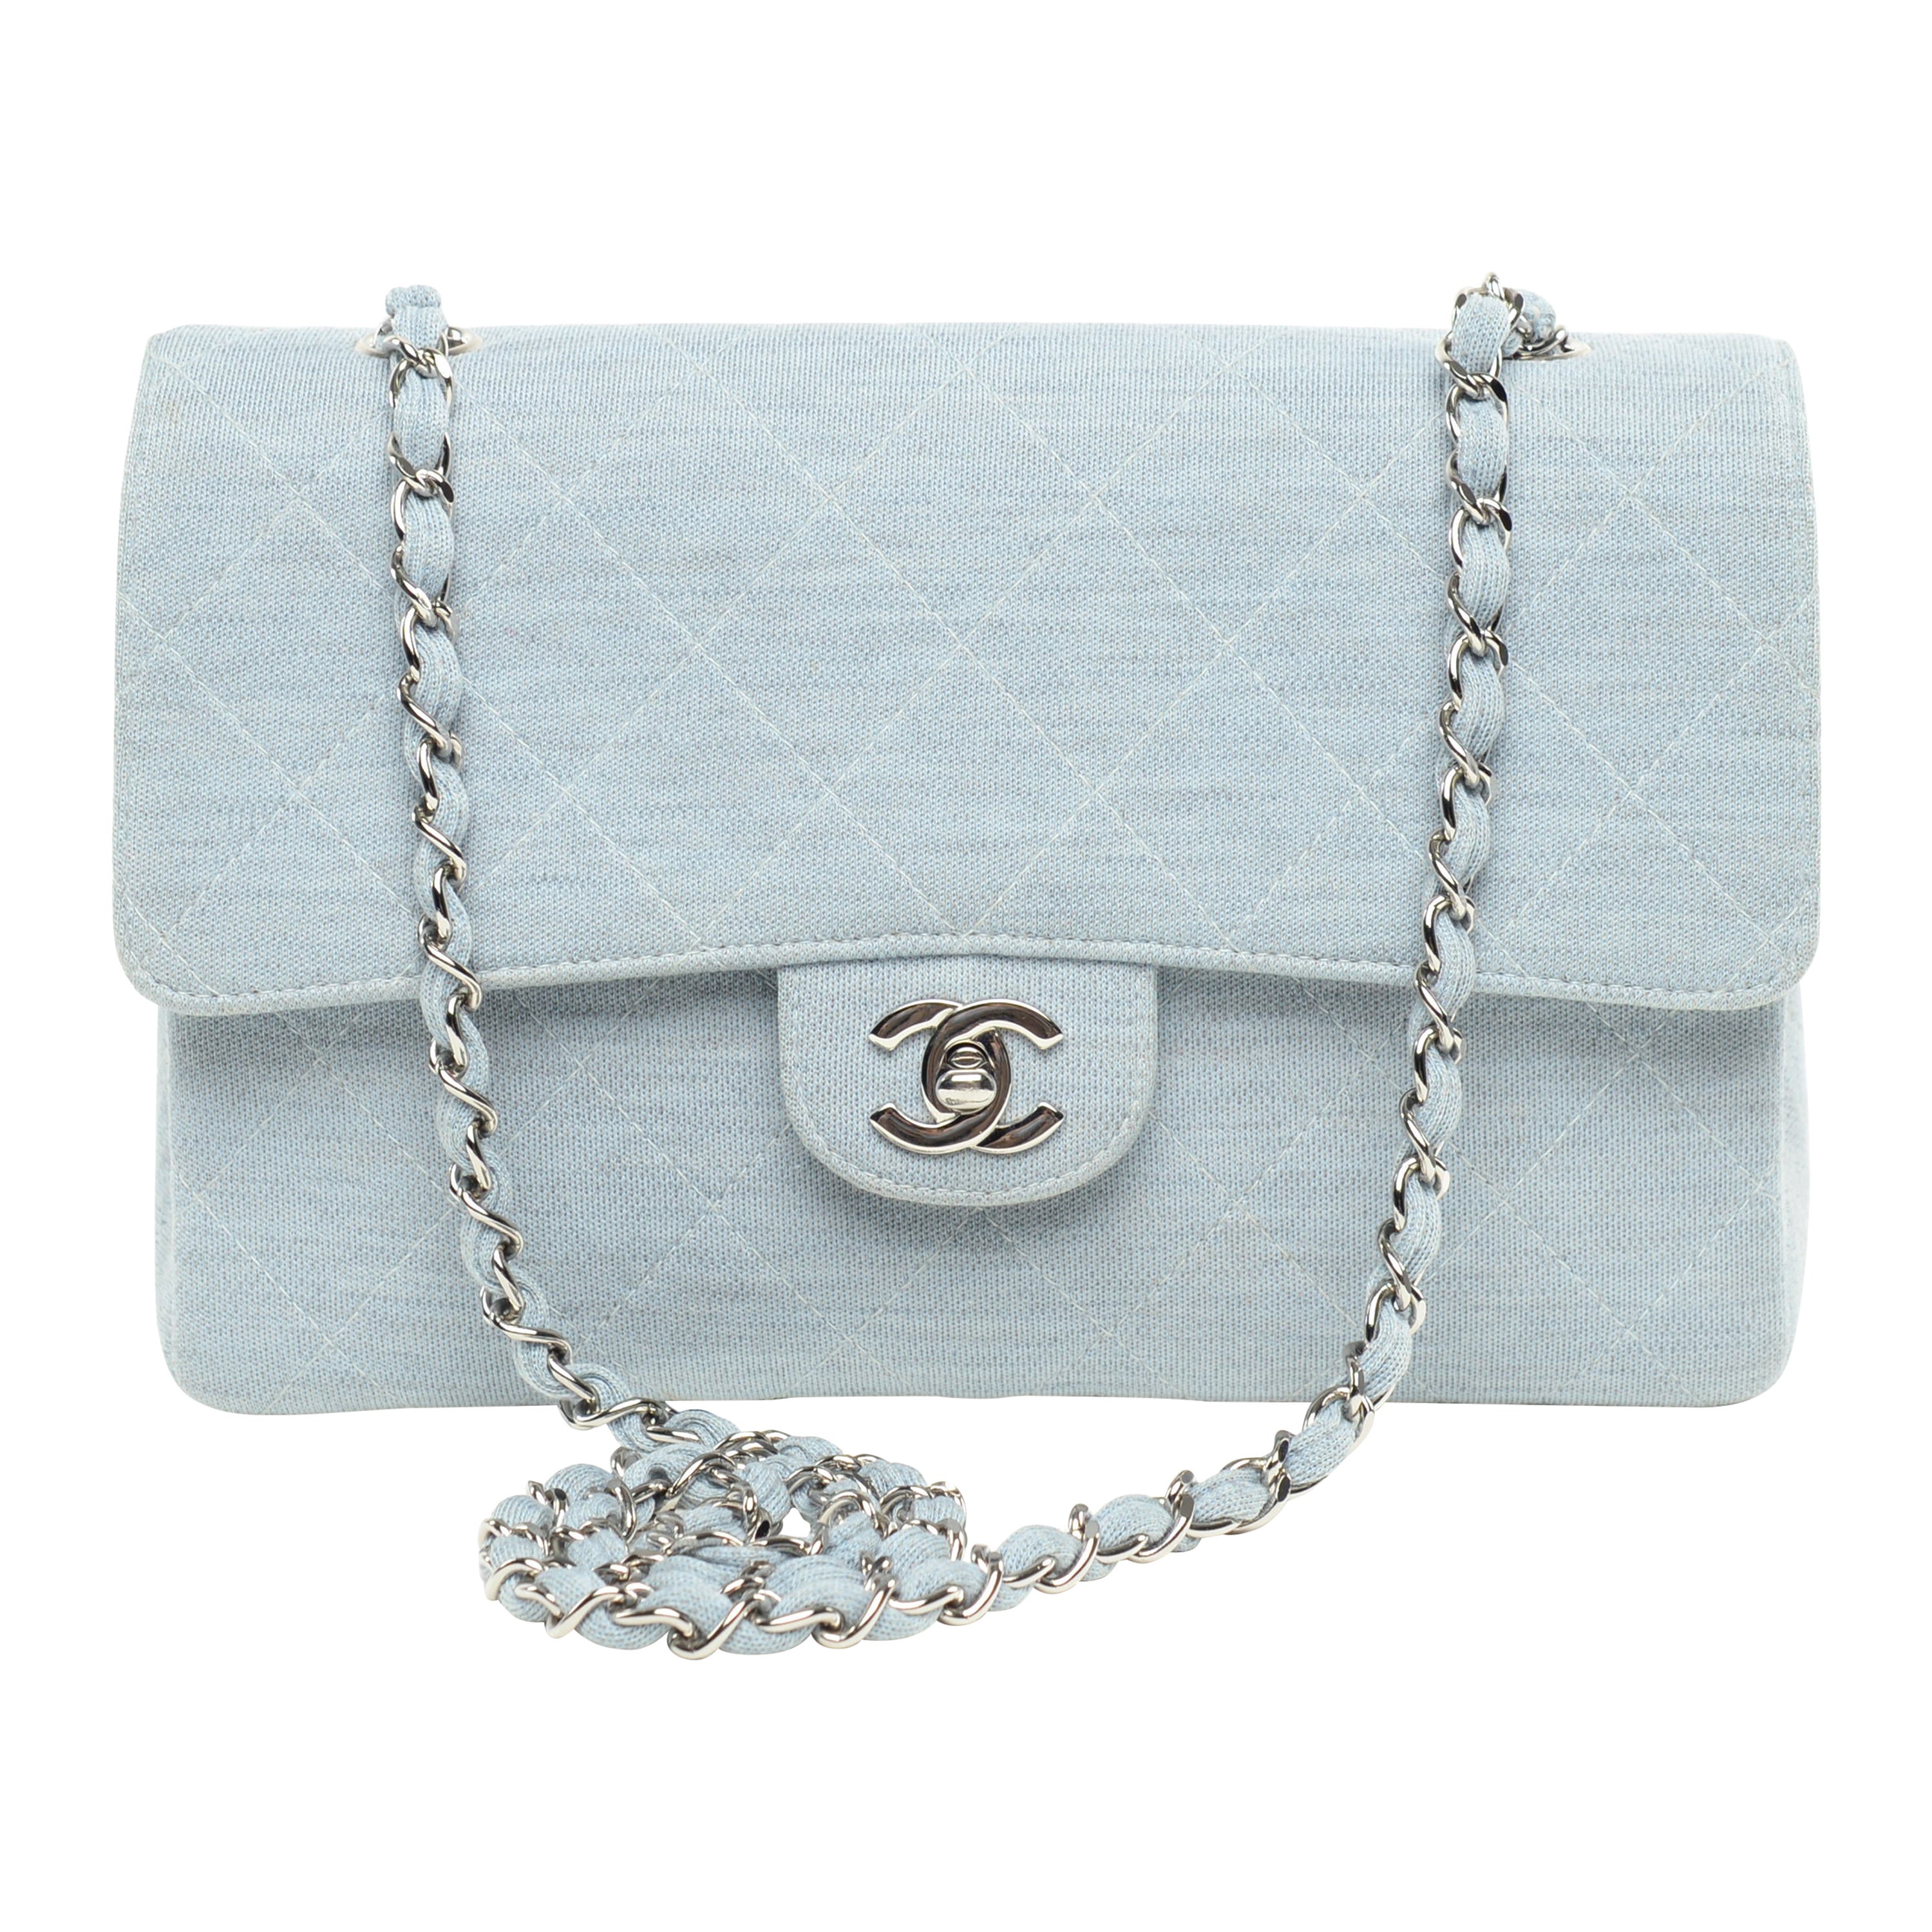 Chanel Flap Bag Light Blue Denim Look SHW 